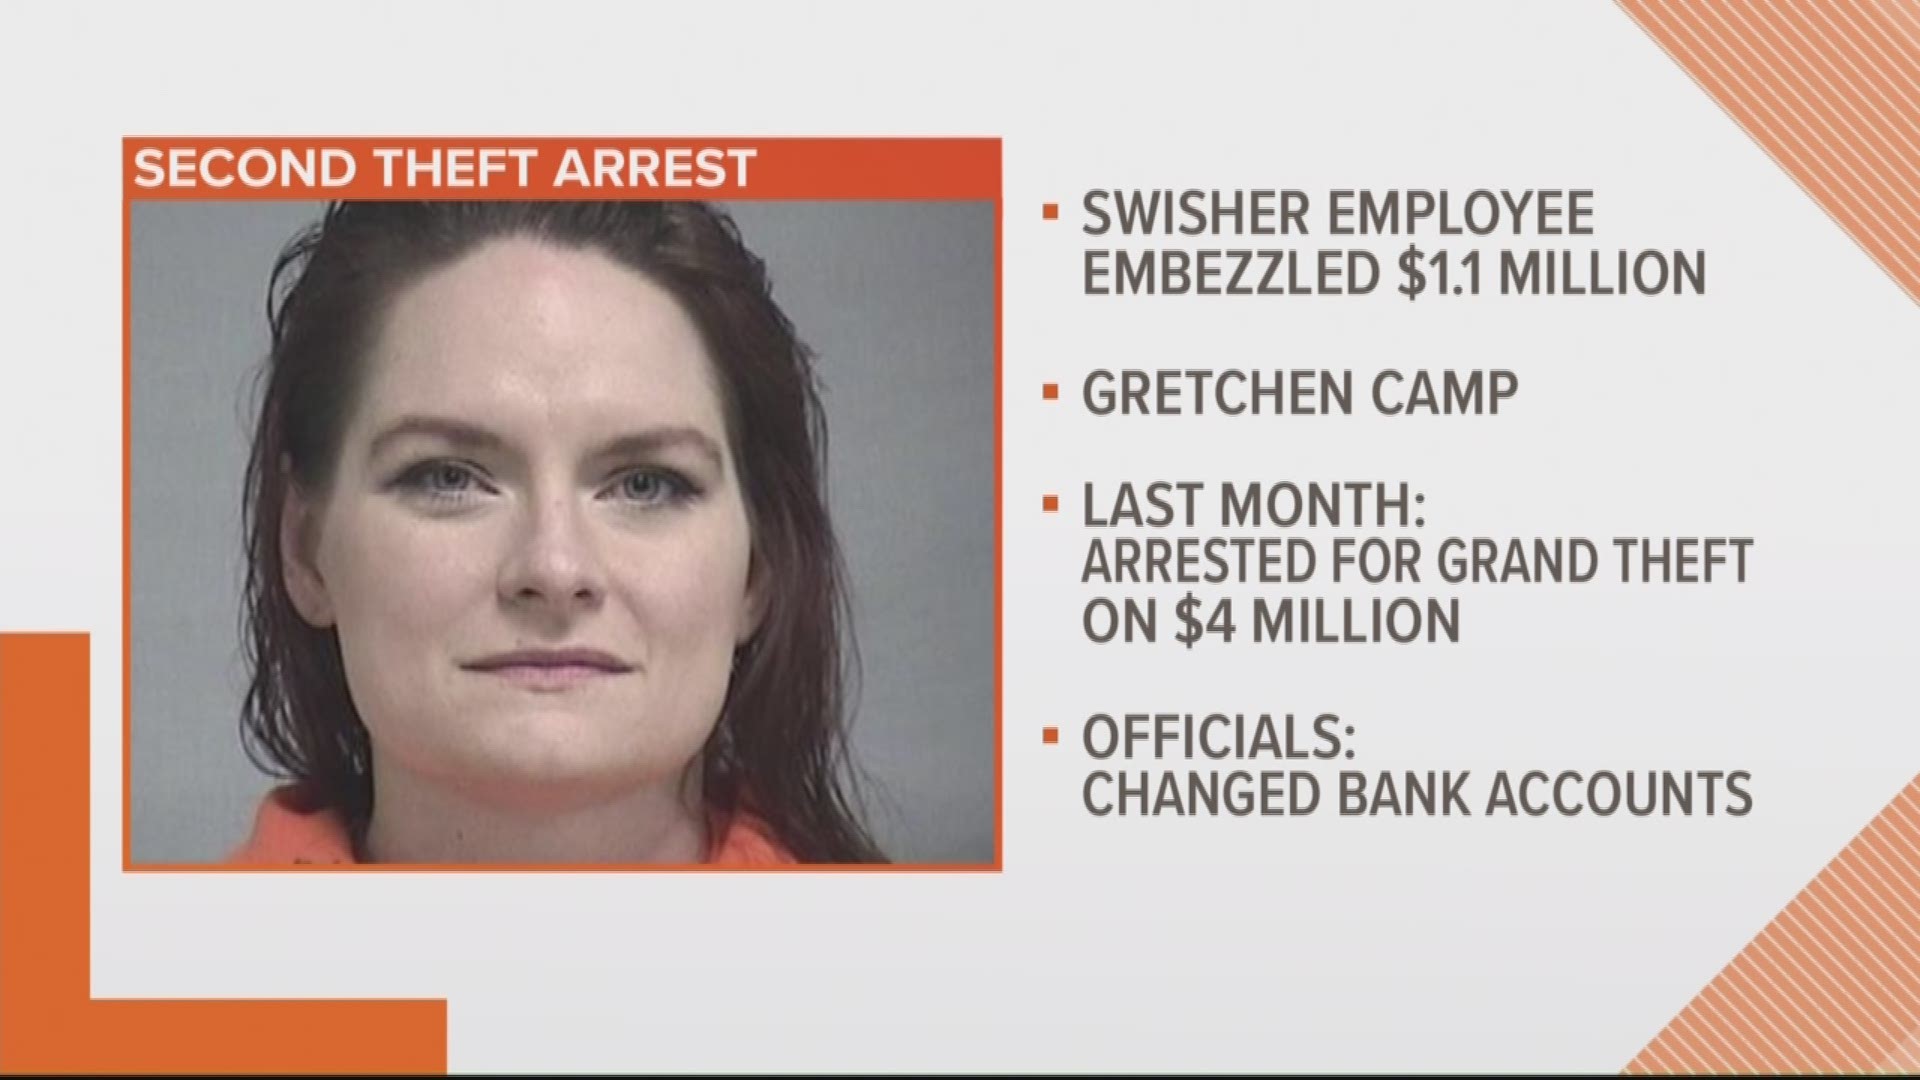 A Swisher employee arrested, again.